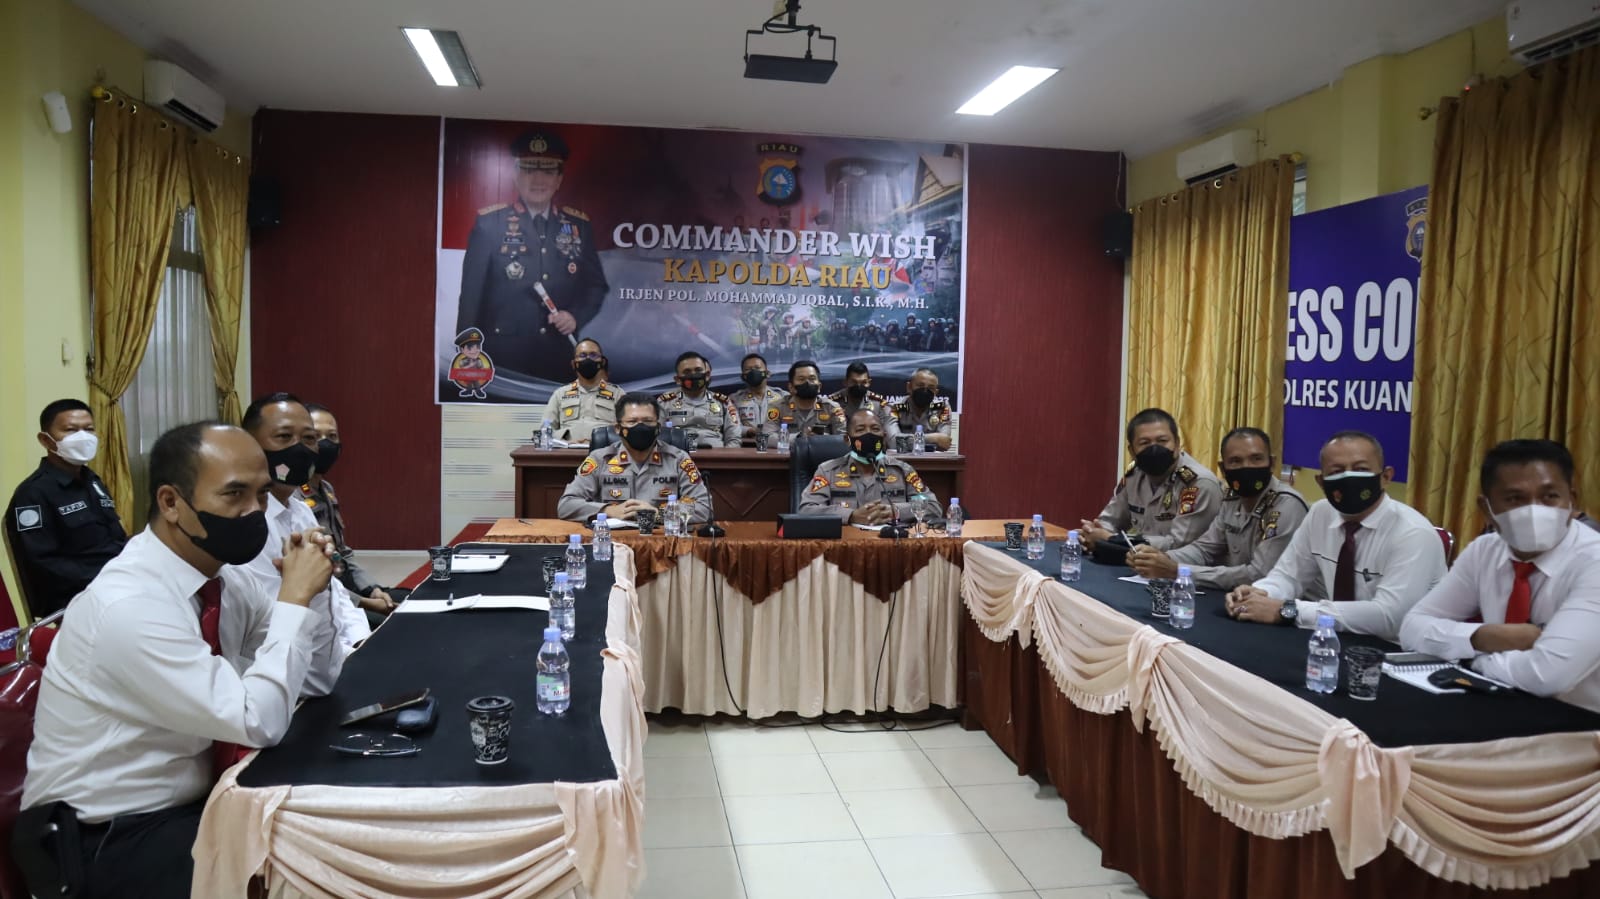 Kapolres Kuansing AKBP Rendra Oktha Dinata, SIK M.Si bersama Jajarannya, Ikuti Vidcon Commander Wish Kapolda Riau